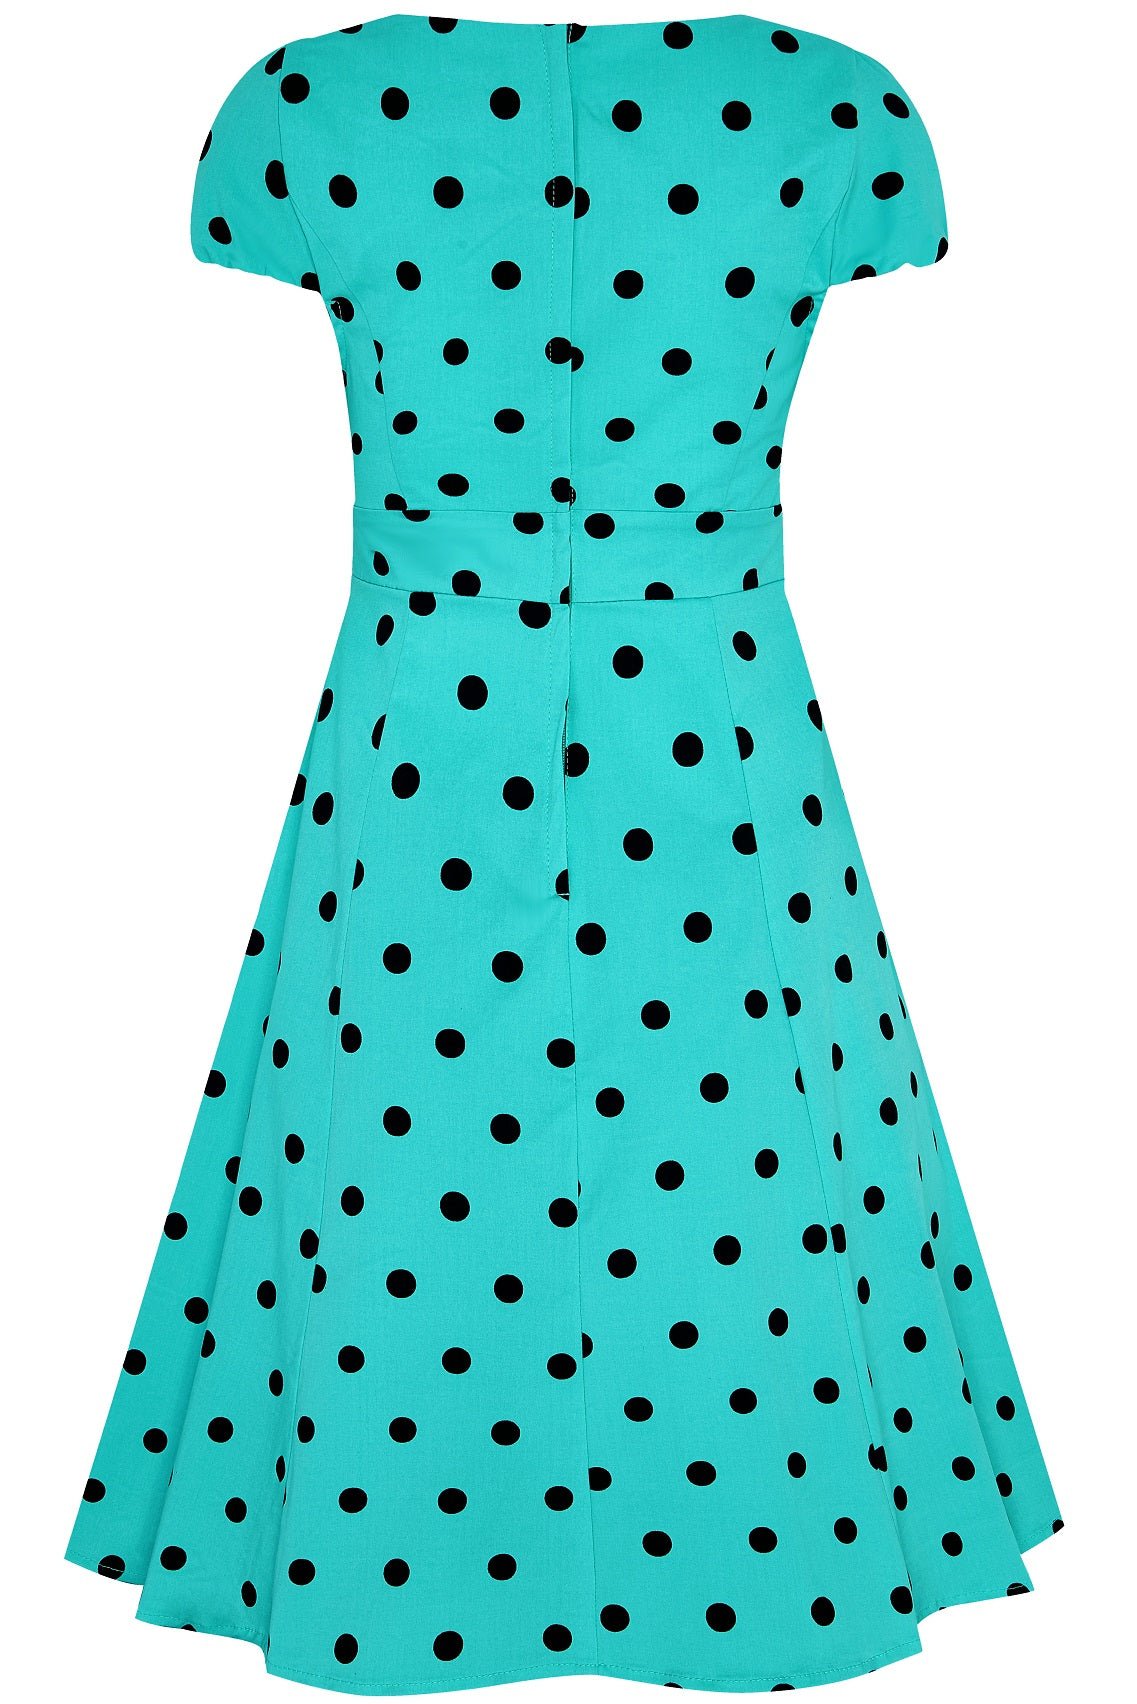 Claudia Flirty Fifties Style Polka Dot Dress Turquoise & Black